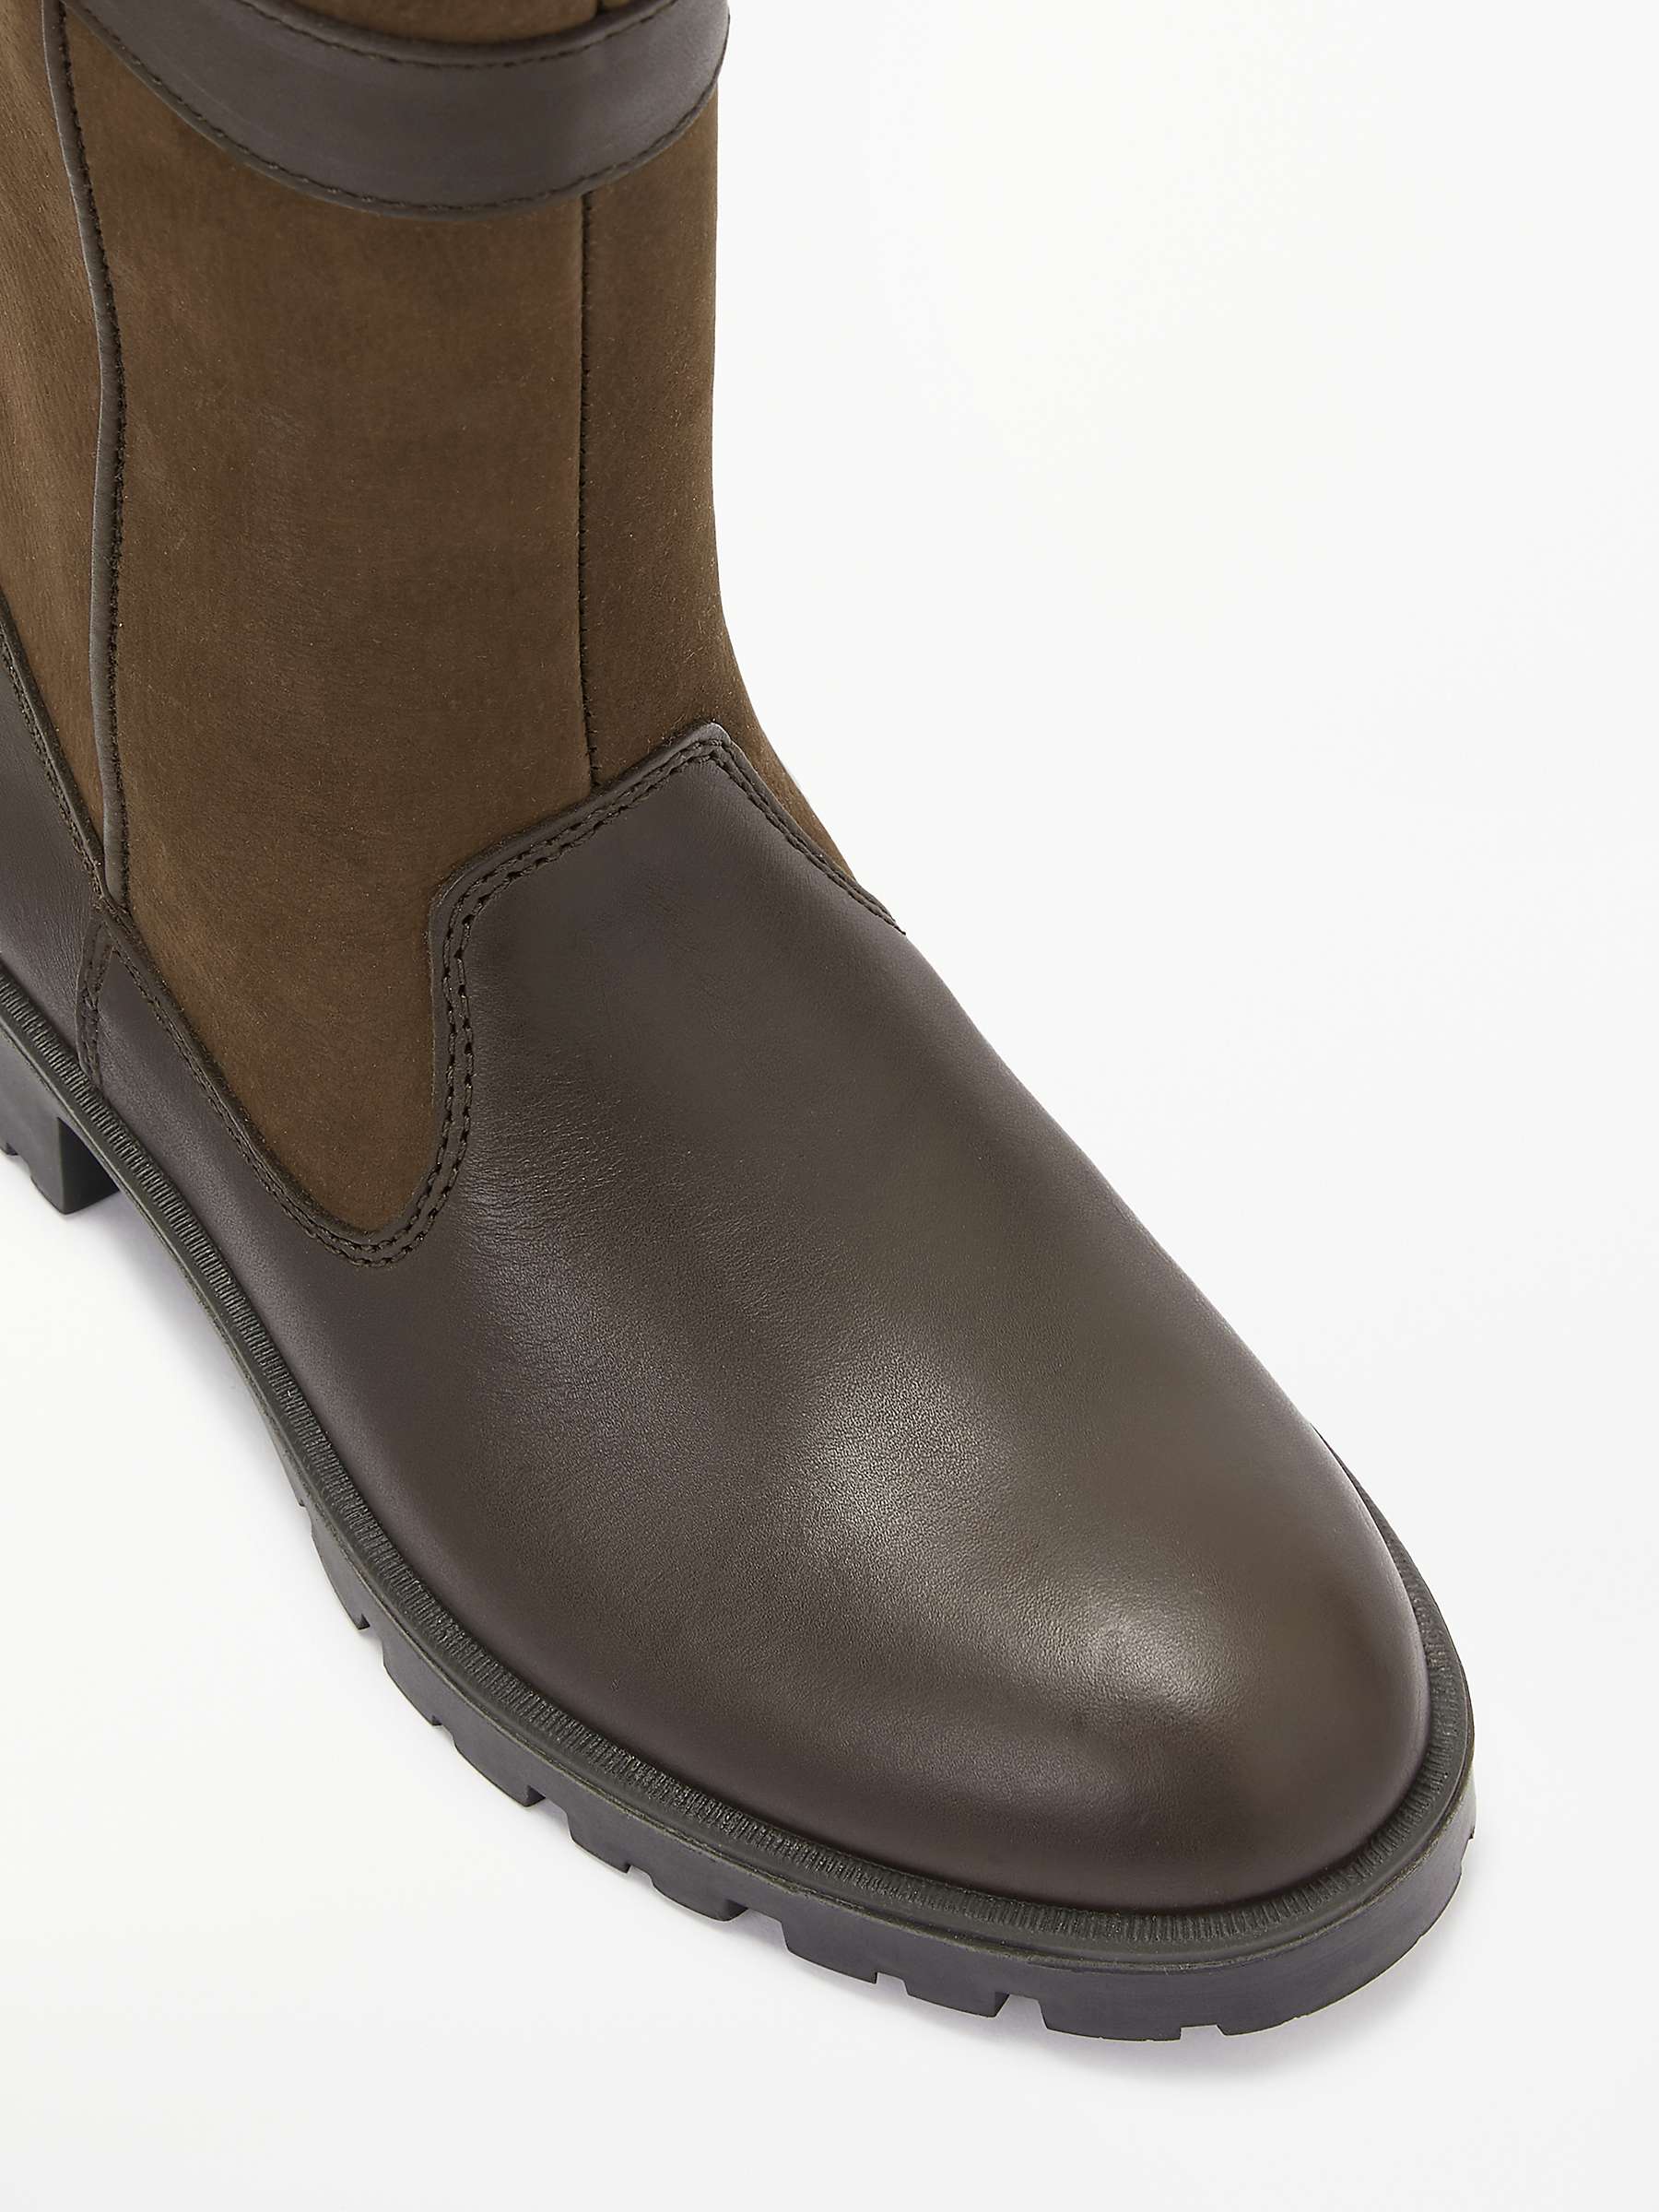 Buy Dubarry Longford Leather Goretex Buckle Trim Knee High Boots, Walnut Online at johnlewis.com